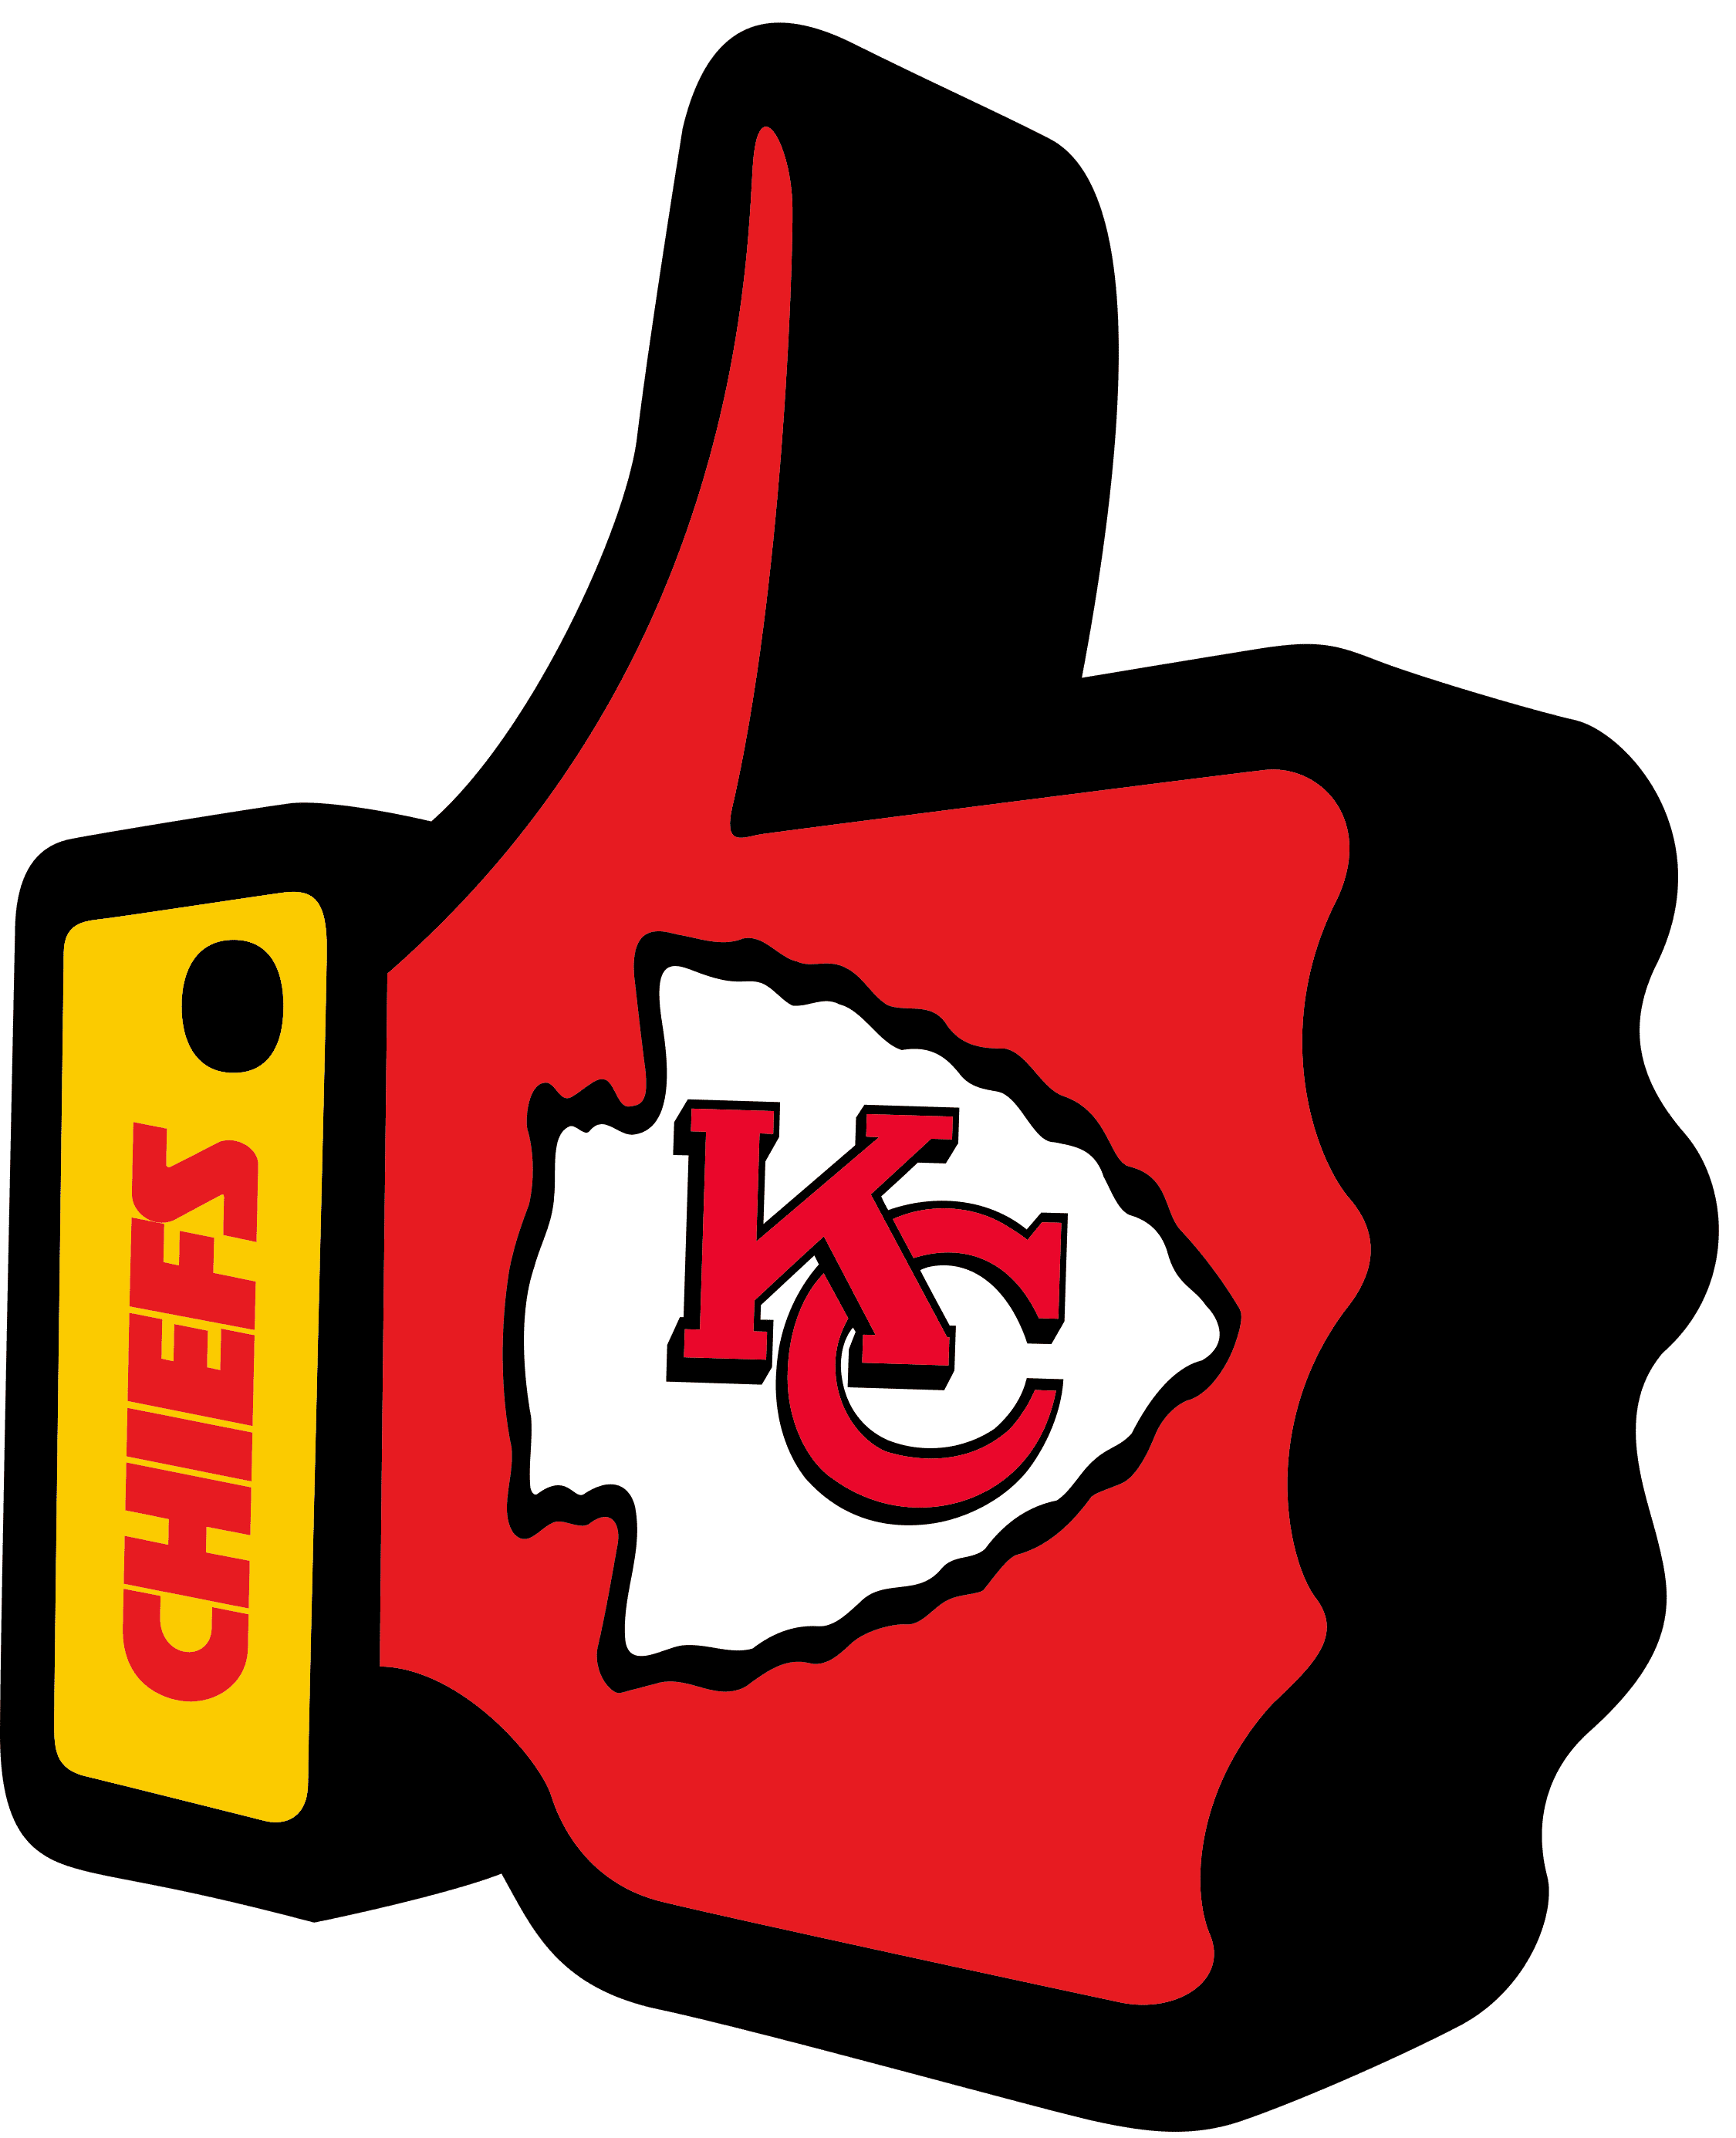 NFL Logo Kansas City Chiefs, Kansas City Chiefs SVG, Vector Kansas City  Chiefs Clipart Kansas City Chiefs American Football Kit Kansas City Chiefs,  SVG, DXF, PNG, American Football Logo Vector Kansas City